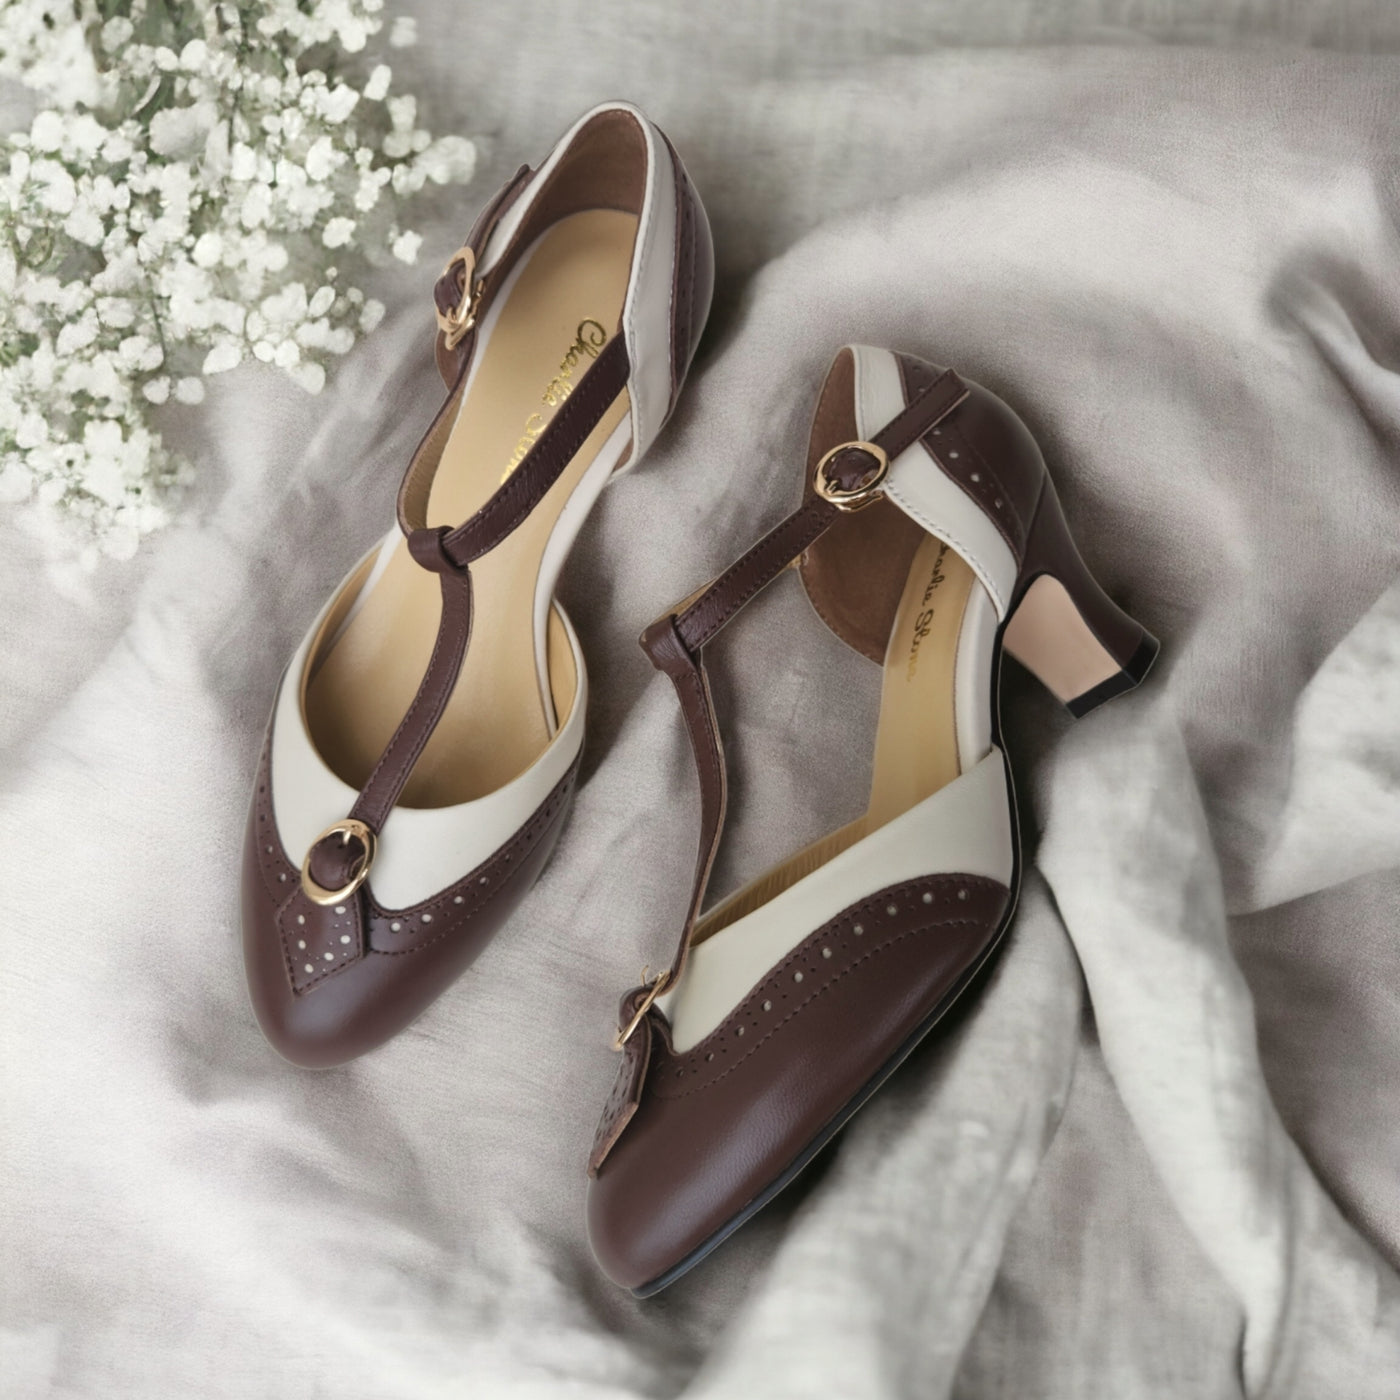 Charlie Stone Shoes vintage inspired 1920s wingtip oxford heels Luxe Parisienne Espresso Beige